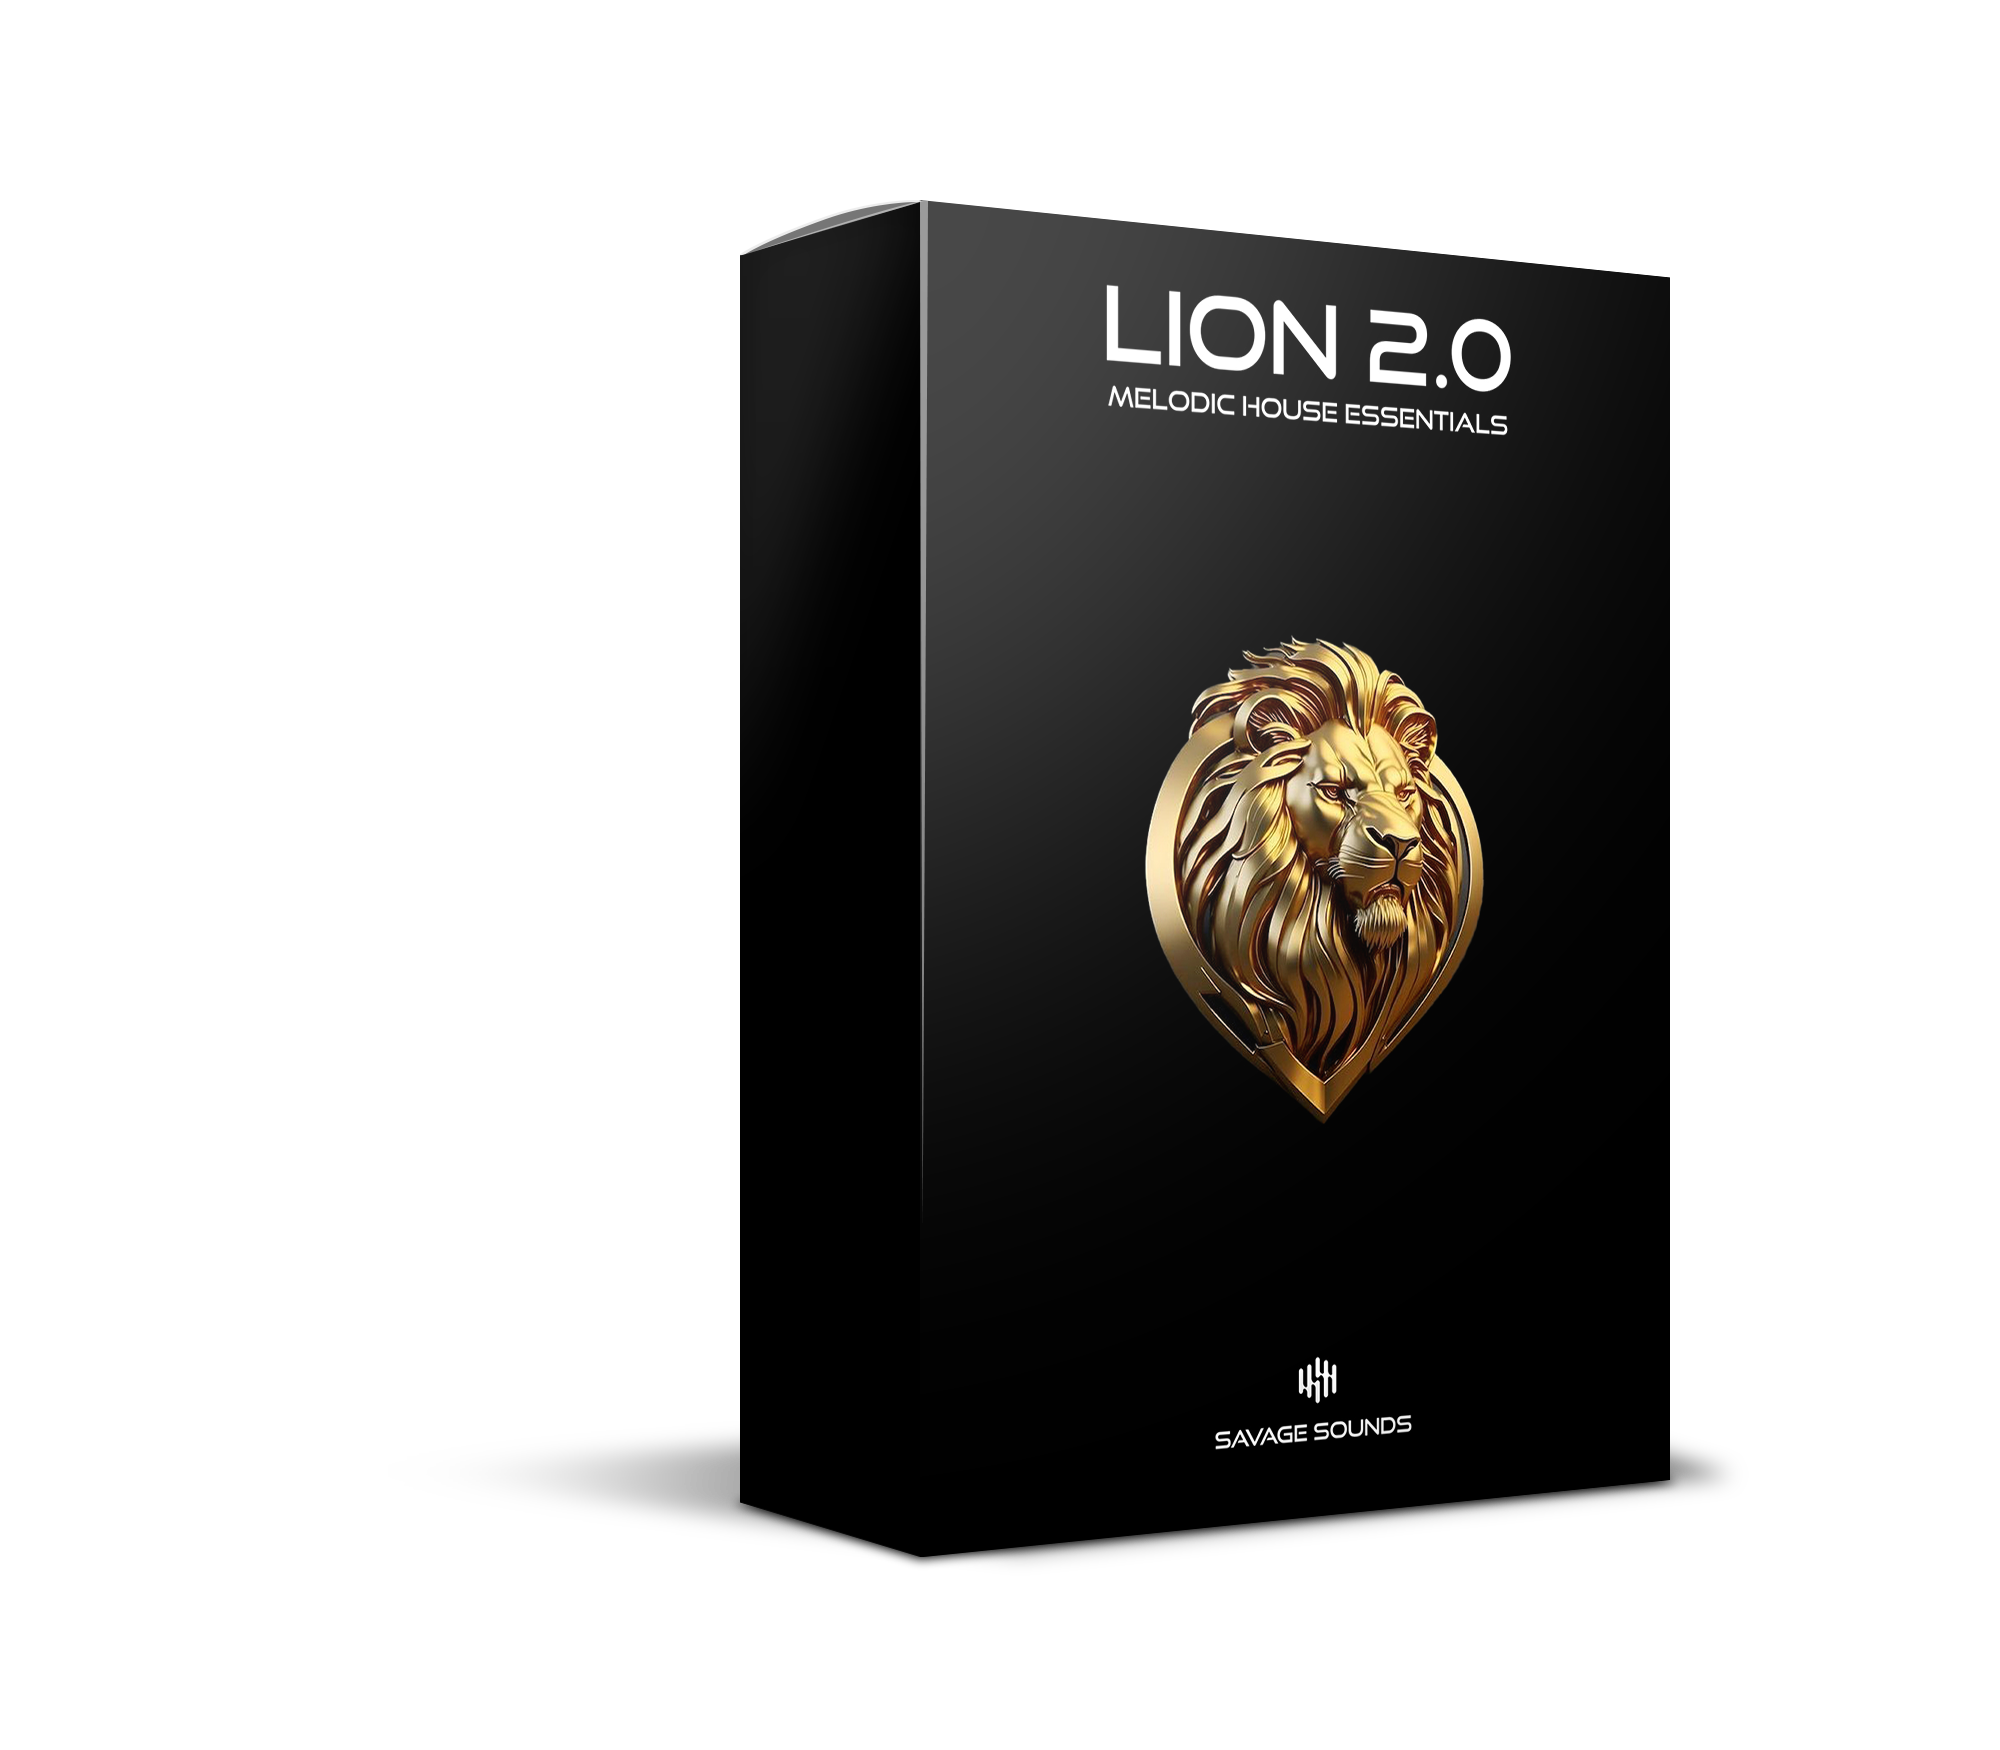 LION 2.0 - Melodic House Essentials